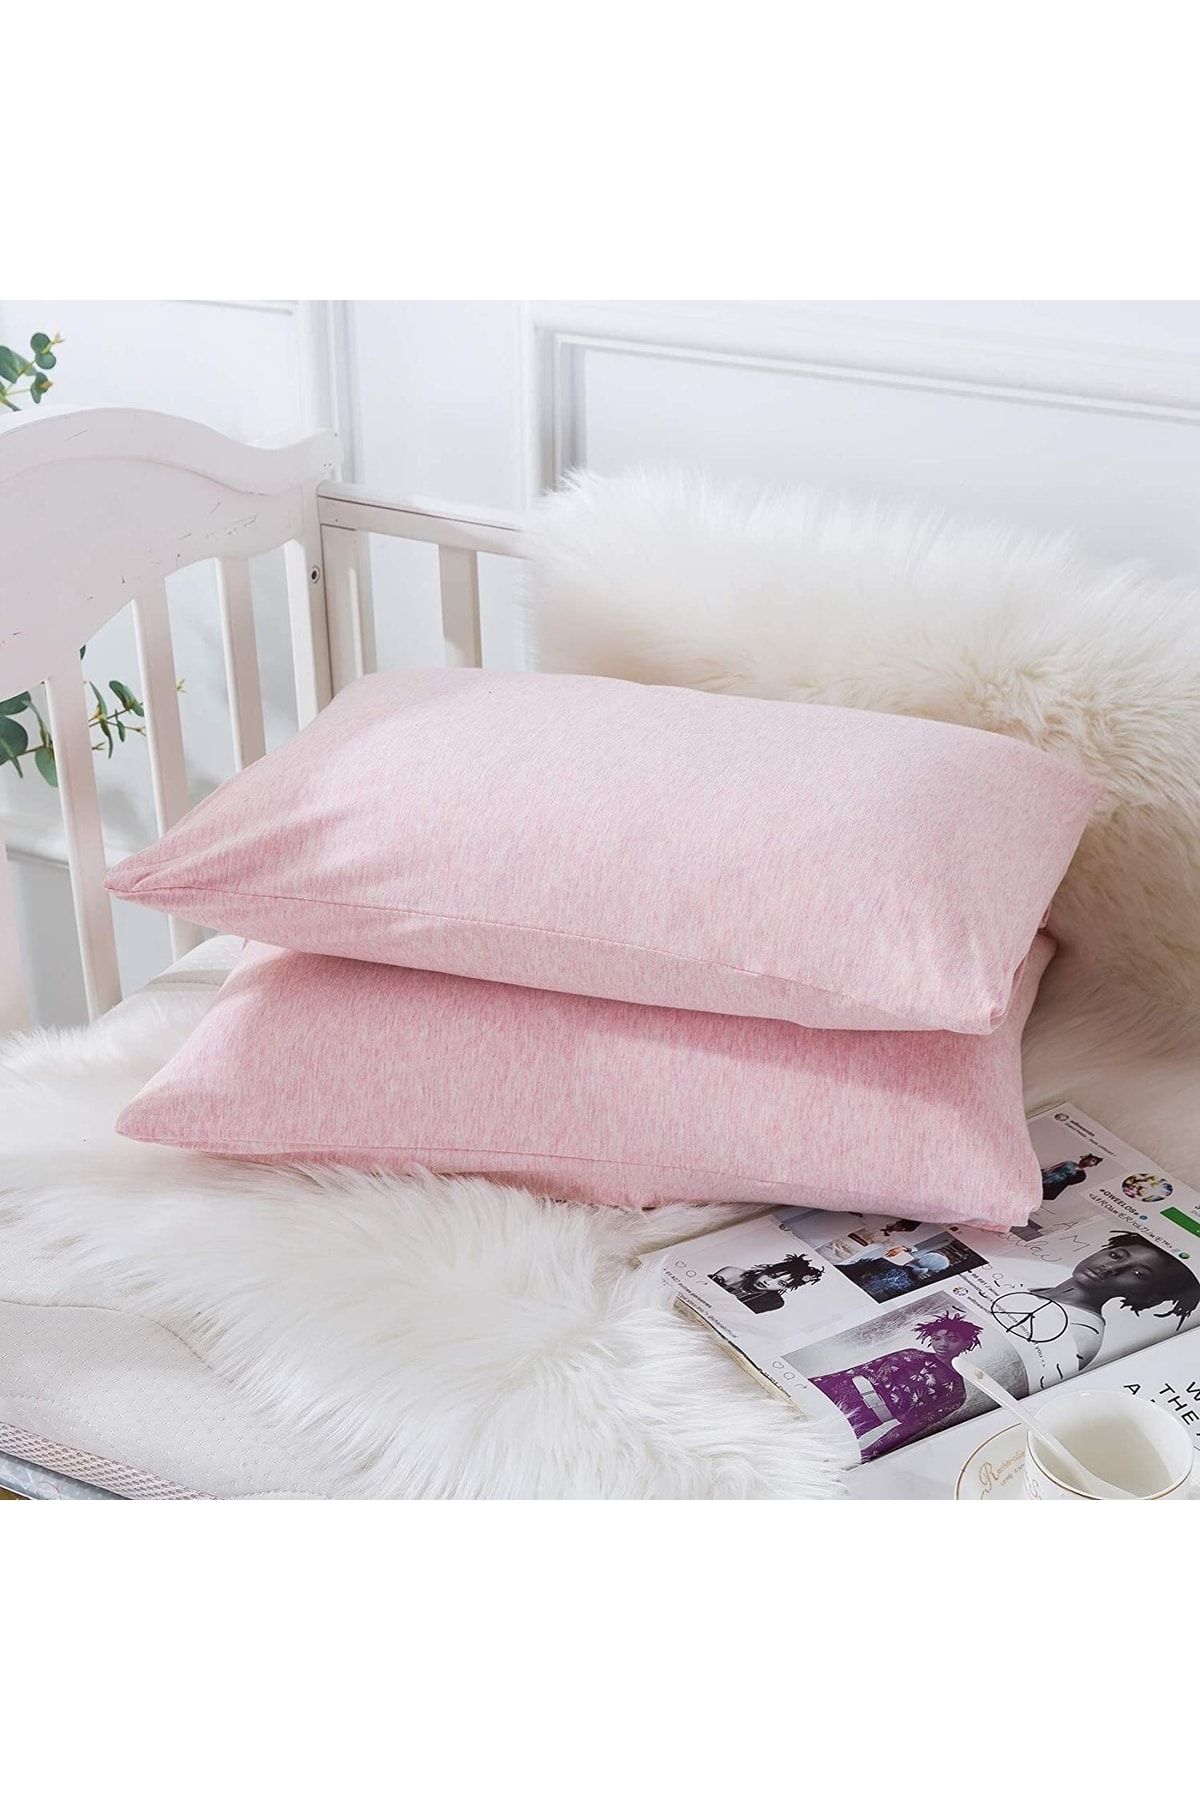 İzgi Concept Bebek Yastık Kılıfı Seti 2 Adet Pembe %100 Pamuklu Kapaklı 35x45 - Premium Quality Baby Pillow Cover